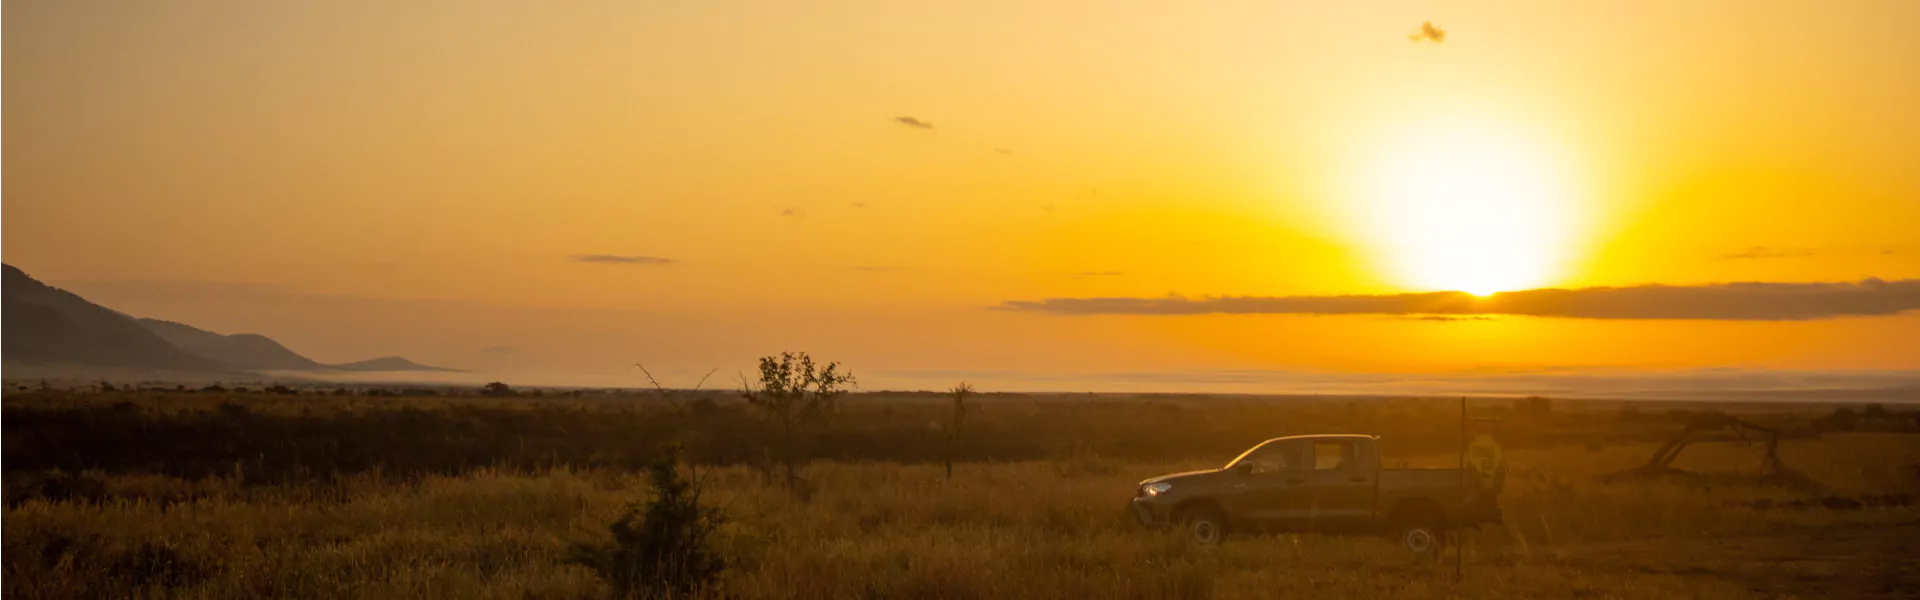 Kenia Safari Selbstfahrer Toyota Hilux Sonnenaufgang